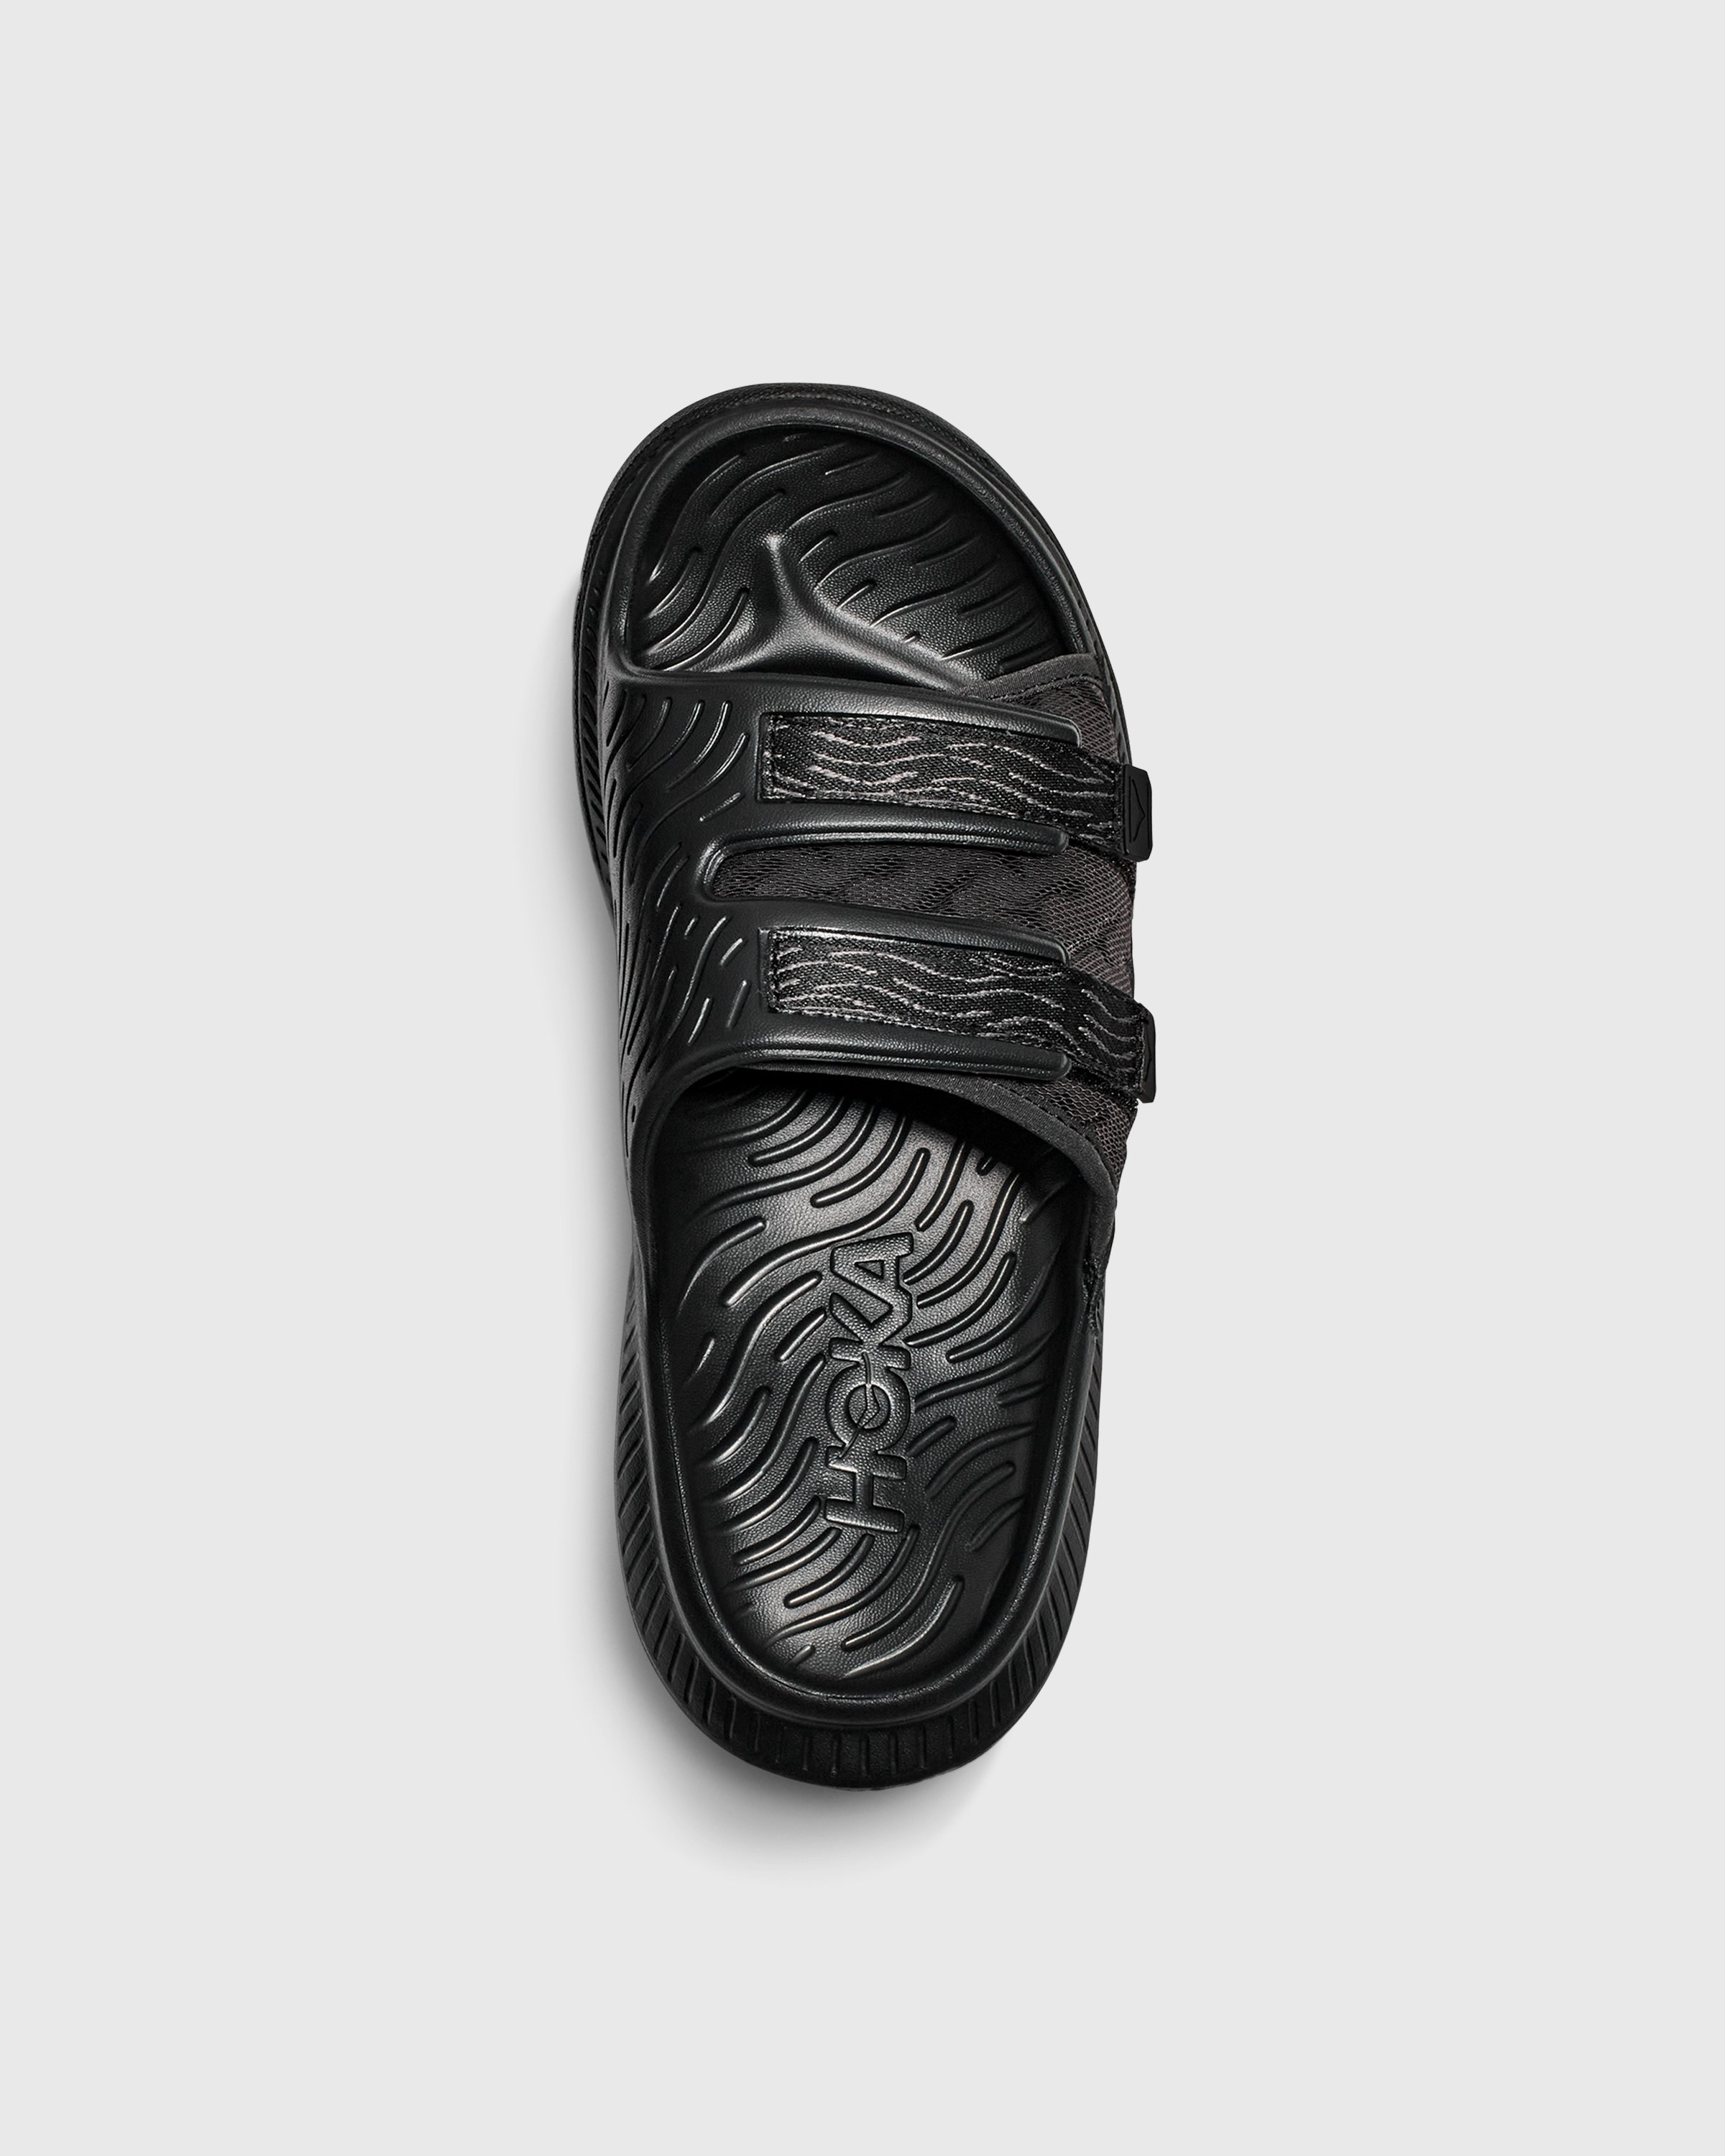 HOKA – ORA LUXE - Sandals & Slides - Black - Image 3